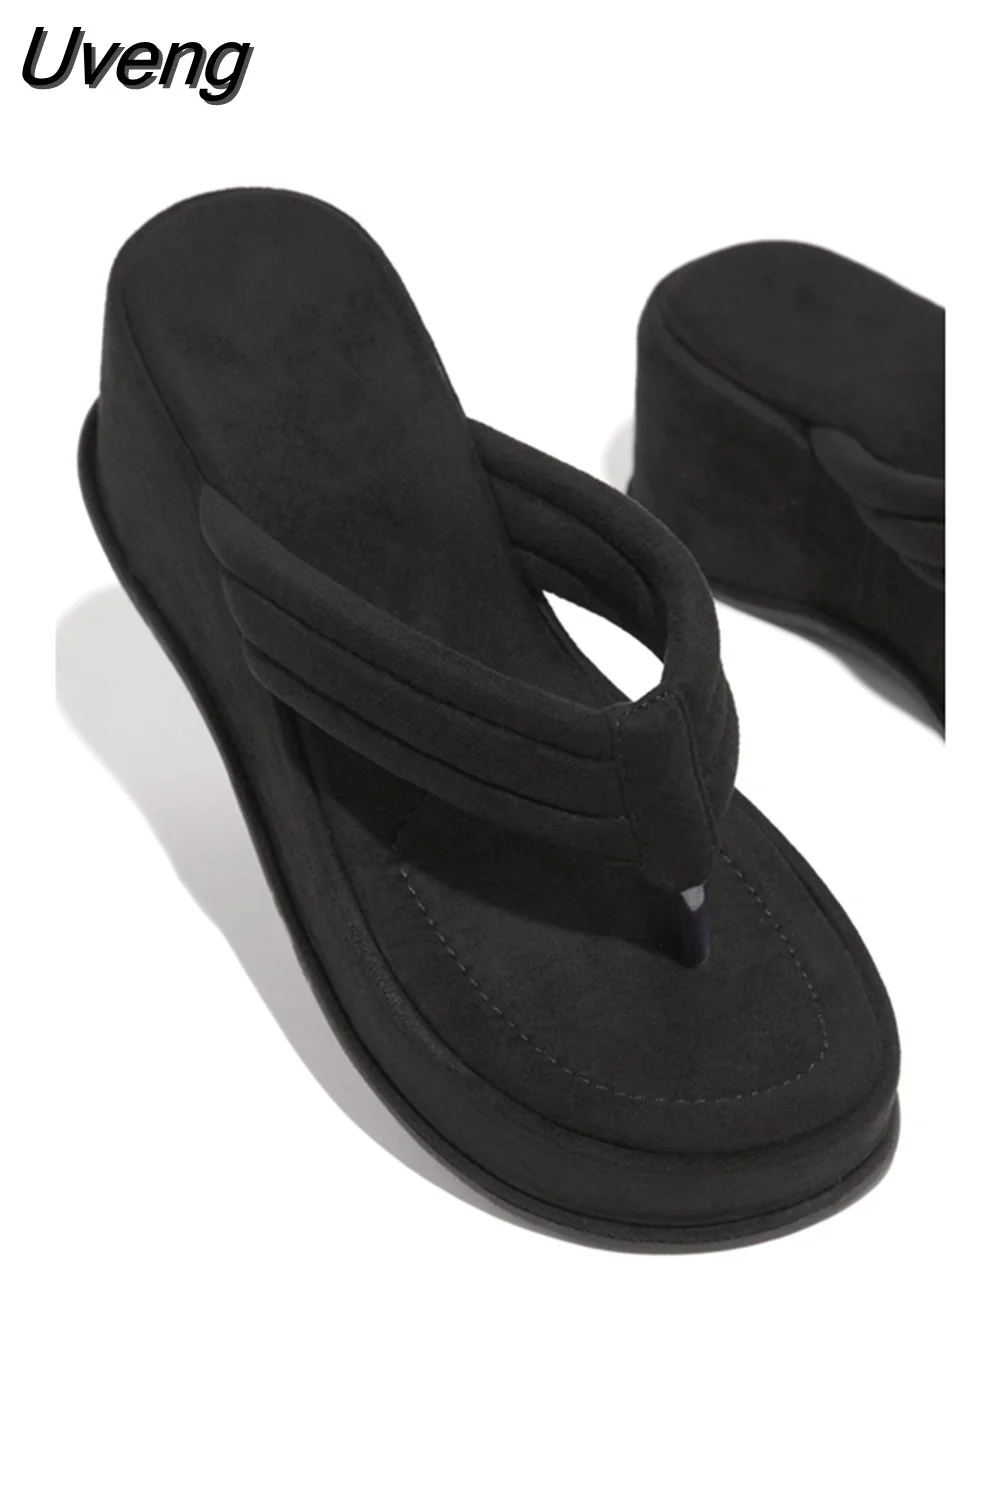 Uveng Wedges Sandals Summer Solid Color Casual Clip Toe Flip Flops Women Platform Slipper Beach Sandals Light Comfort Shoes 2023 430-1